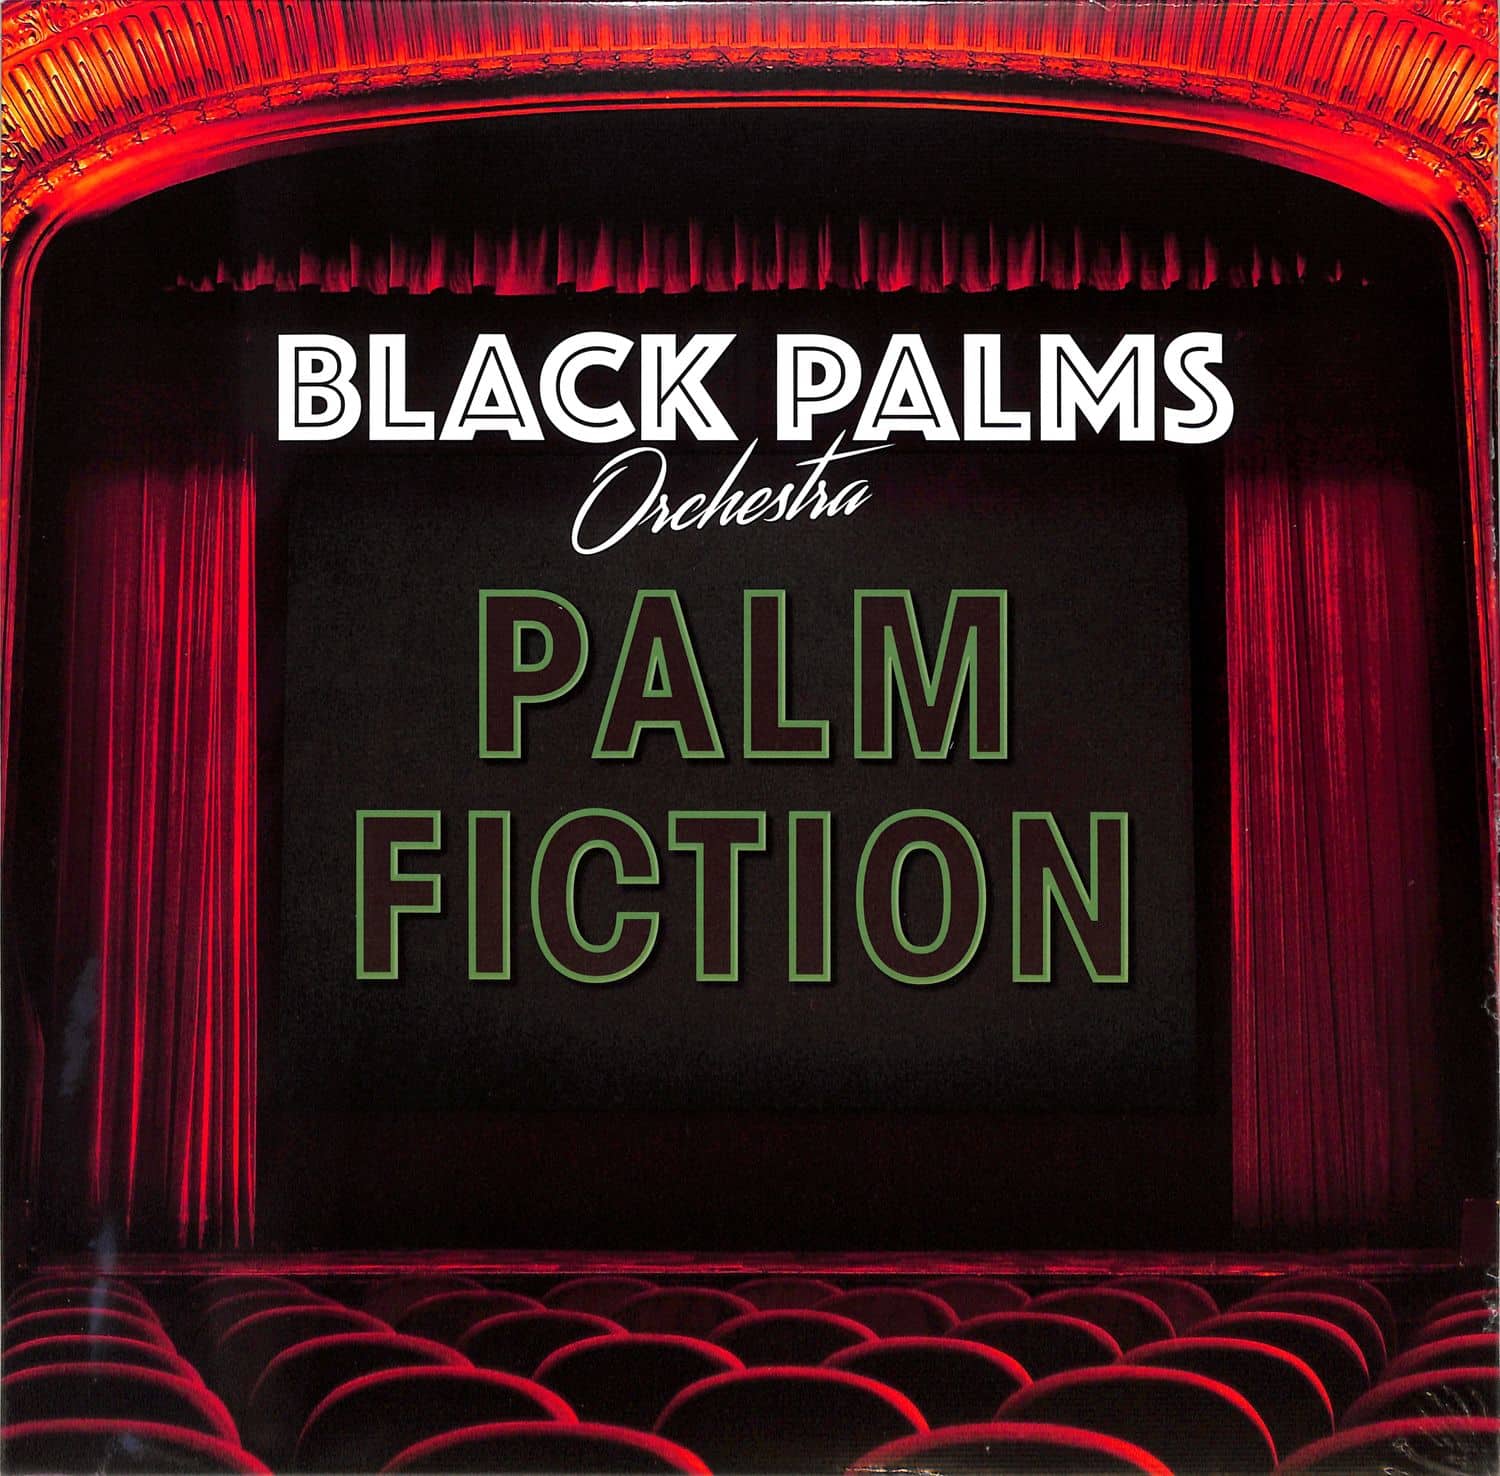 Black Palms Orchestra - PALM FICTION 